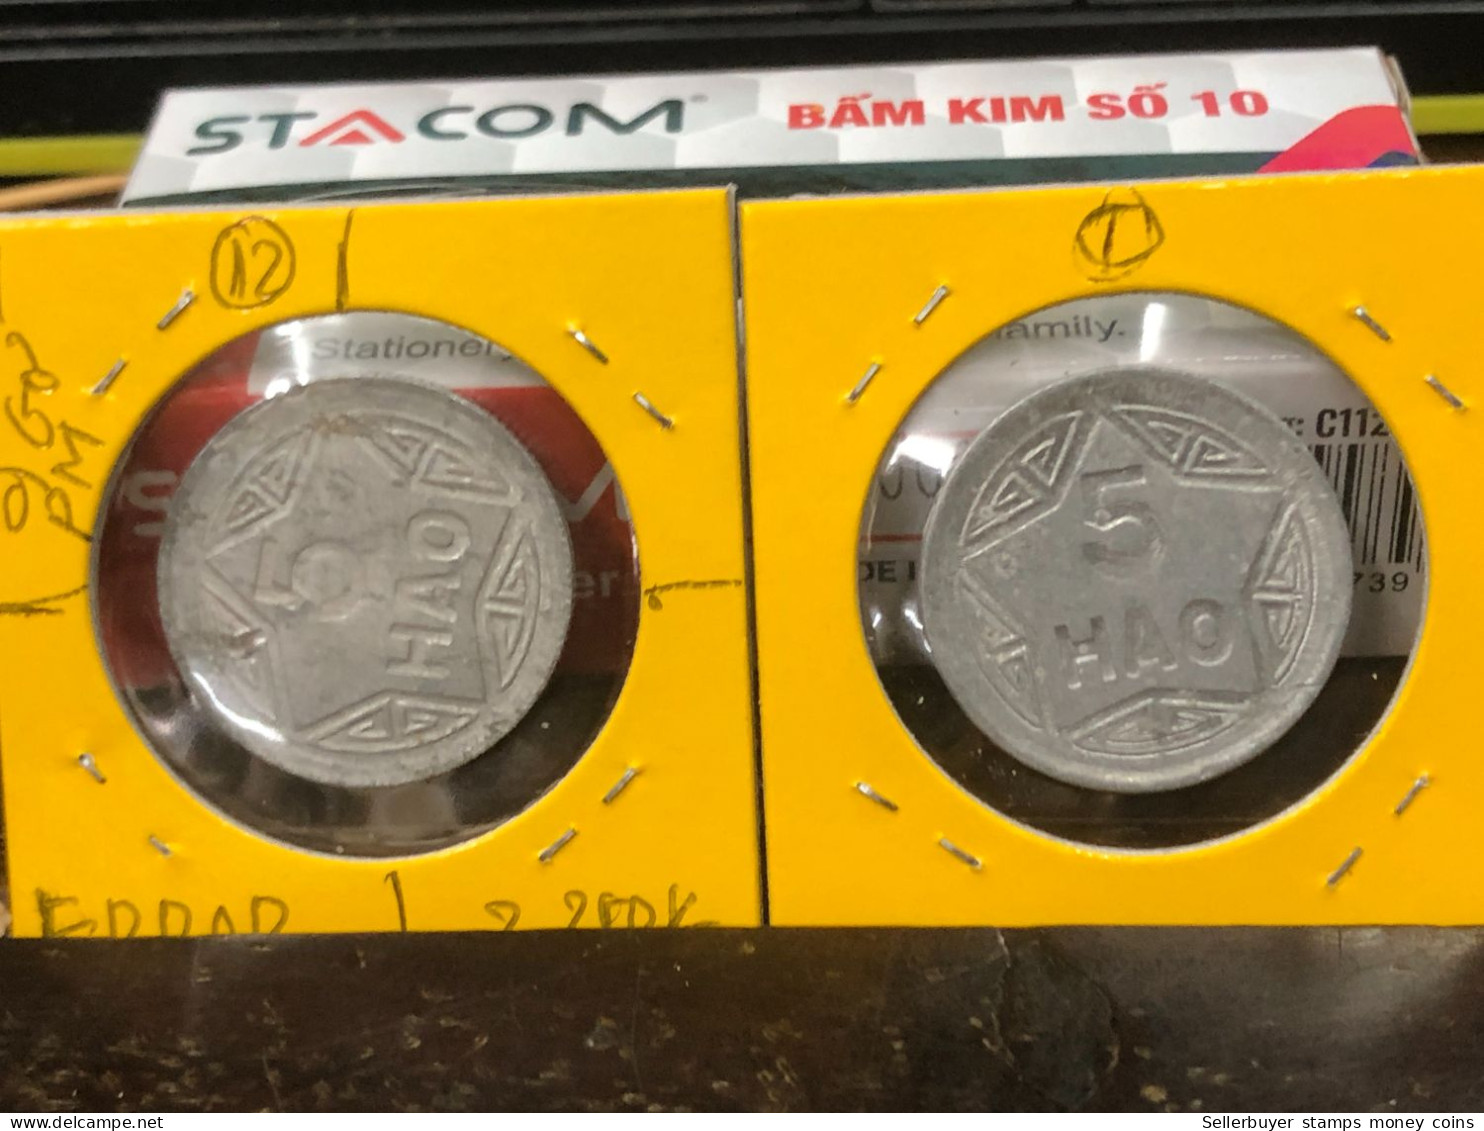 VIET-NAM DAN-CHU CONG-HOA-aluminium-KM#2.1 1946 5 Hao(coins Error Backside Printing 9 Pm)-1 Pcs- Xf No 12 - Viêt-Nam